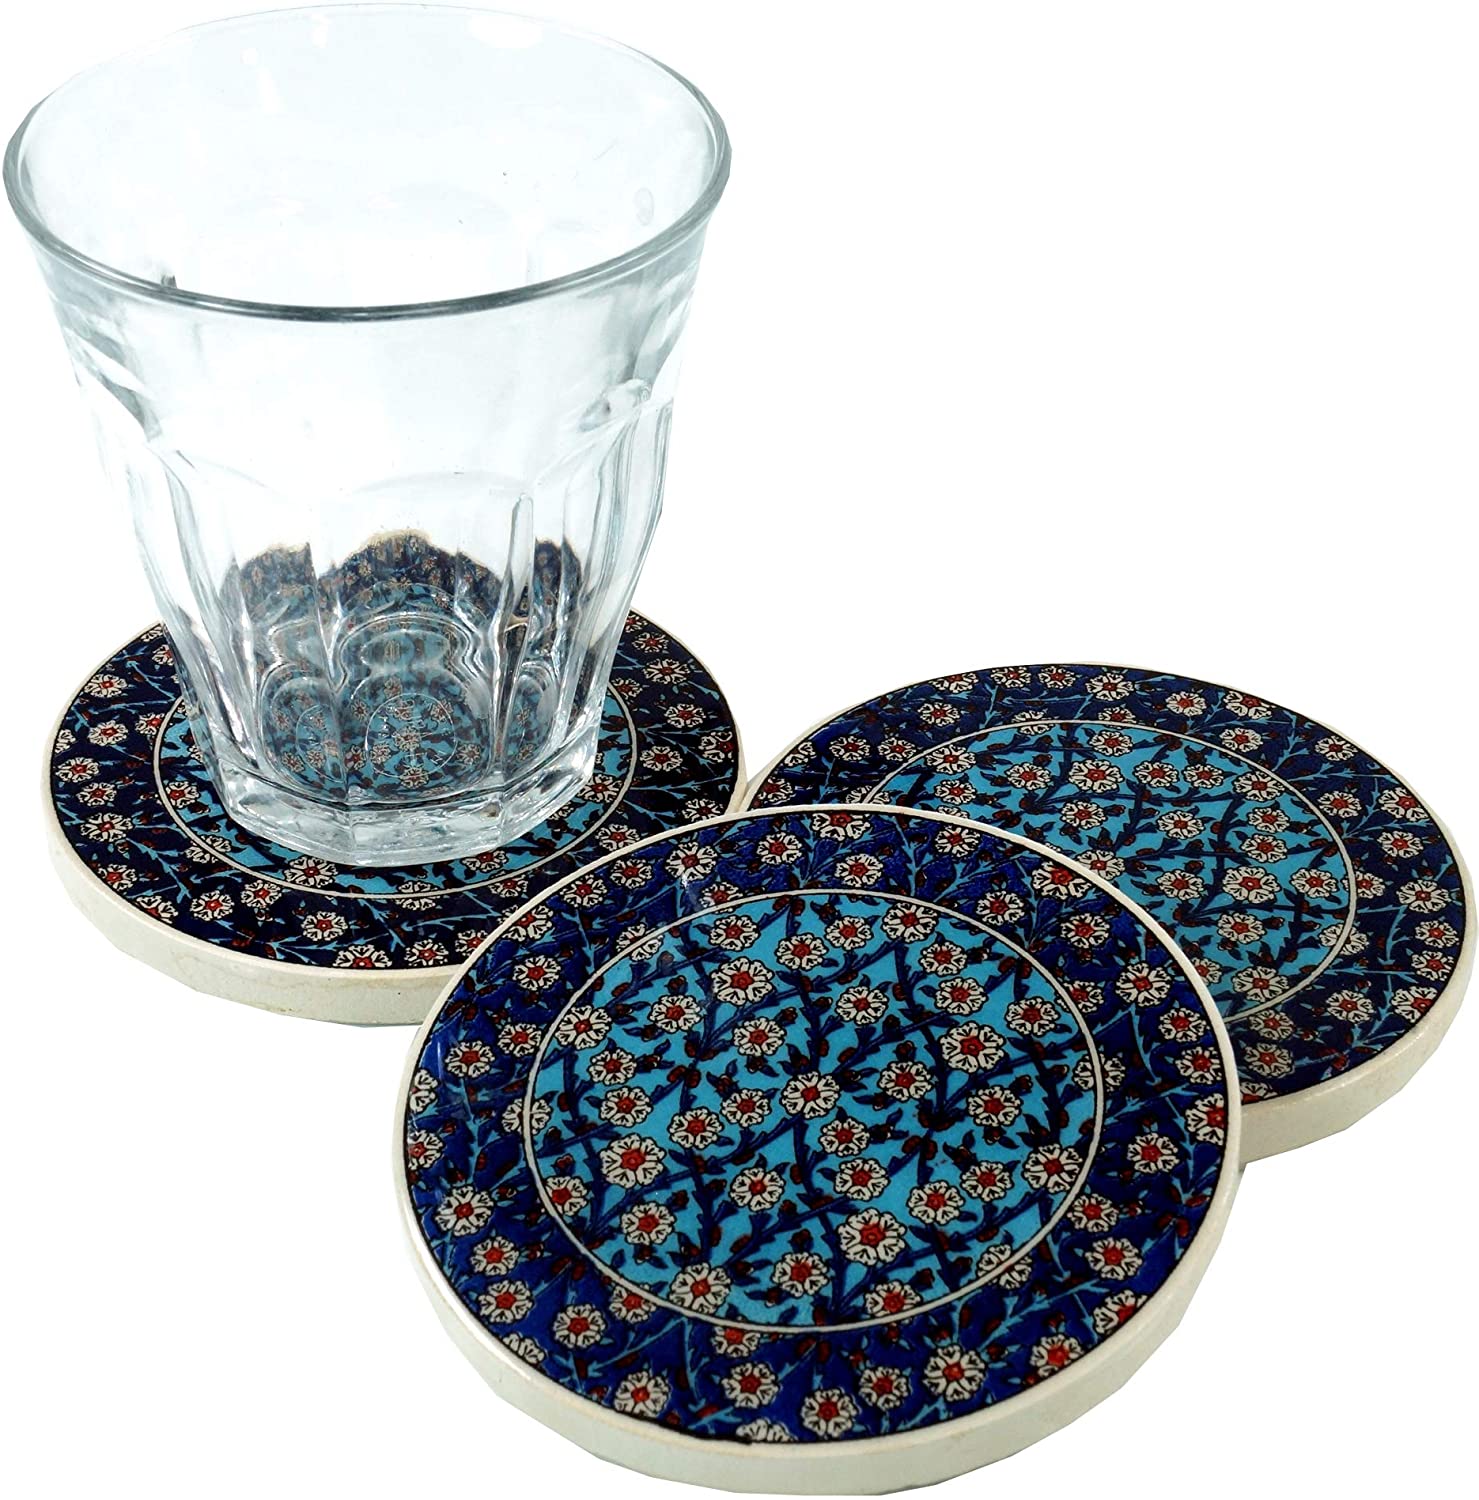 Guru-Shop GURU SHOP Oriental Ceramic Coasters, Round Coasters for Glasses, Cups with Mandala Motif Set - Pattern 1, Blue, Quantity: Set of 6, 1 x 8 x 8 cm, Coasters, Trays